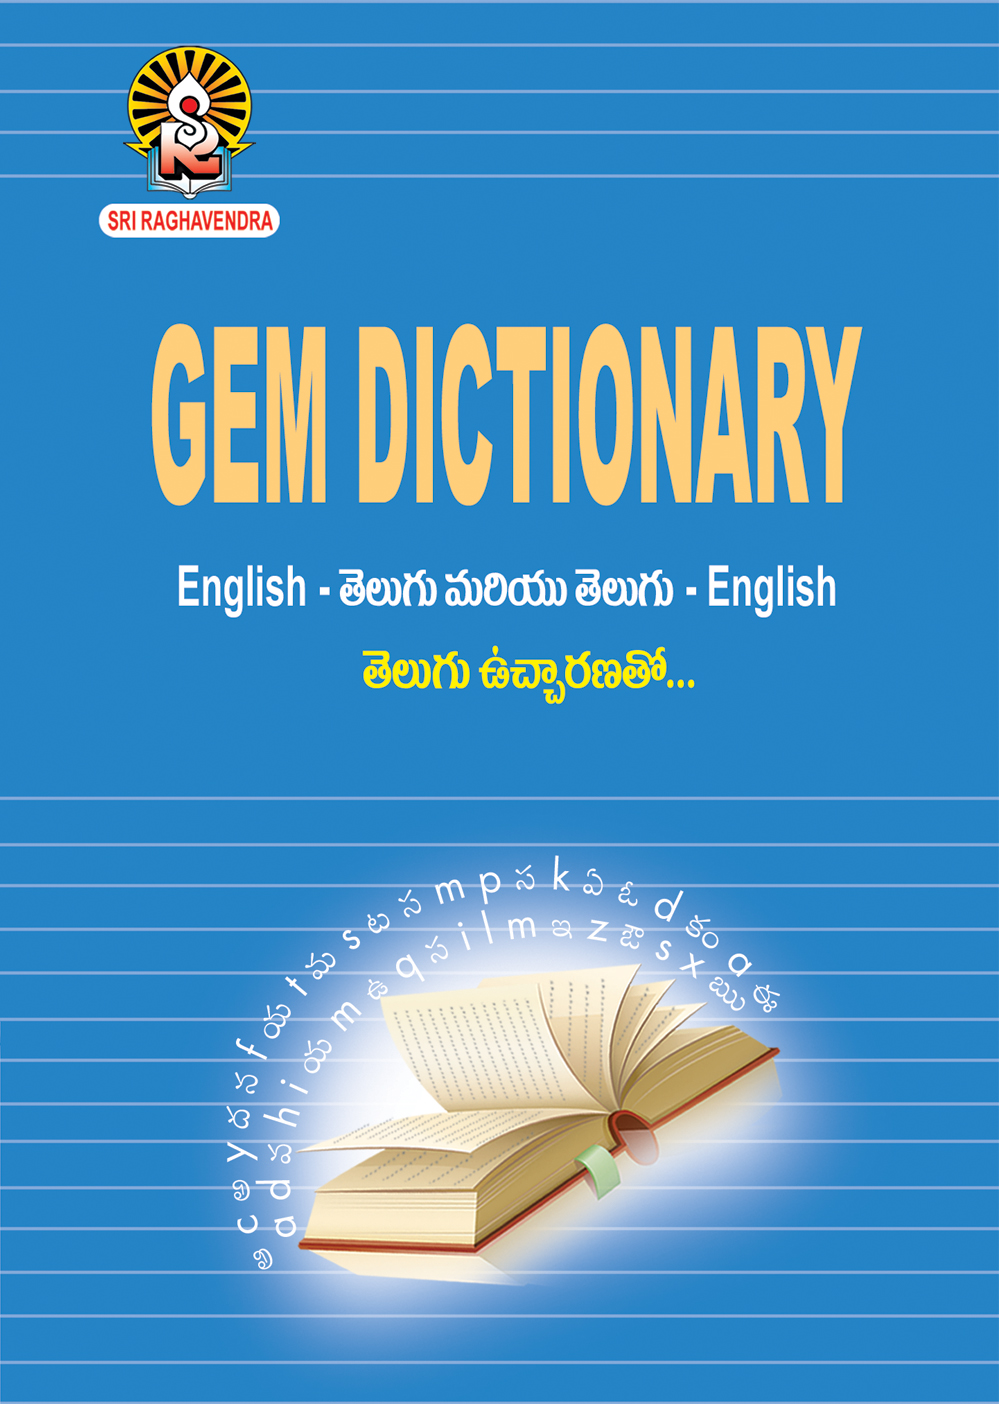 GEM Dictionary (English - English -Telugu )